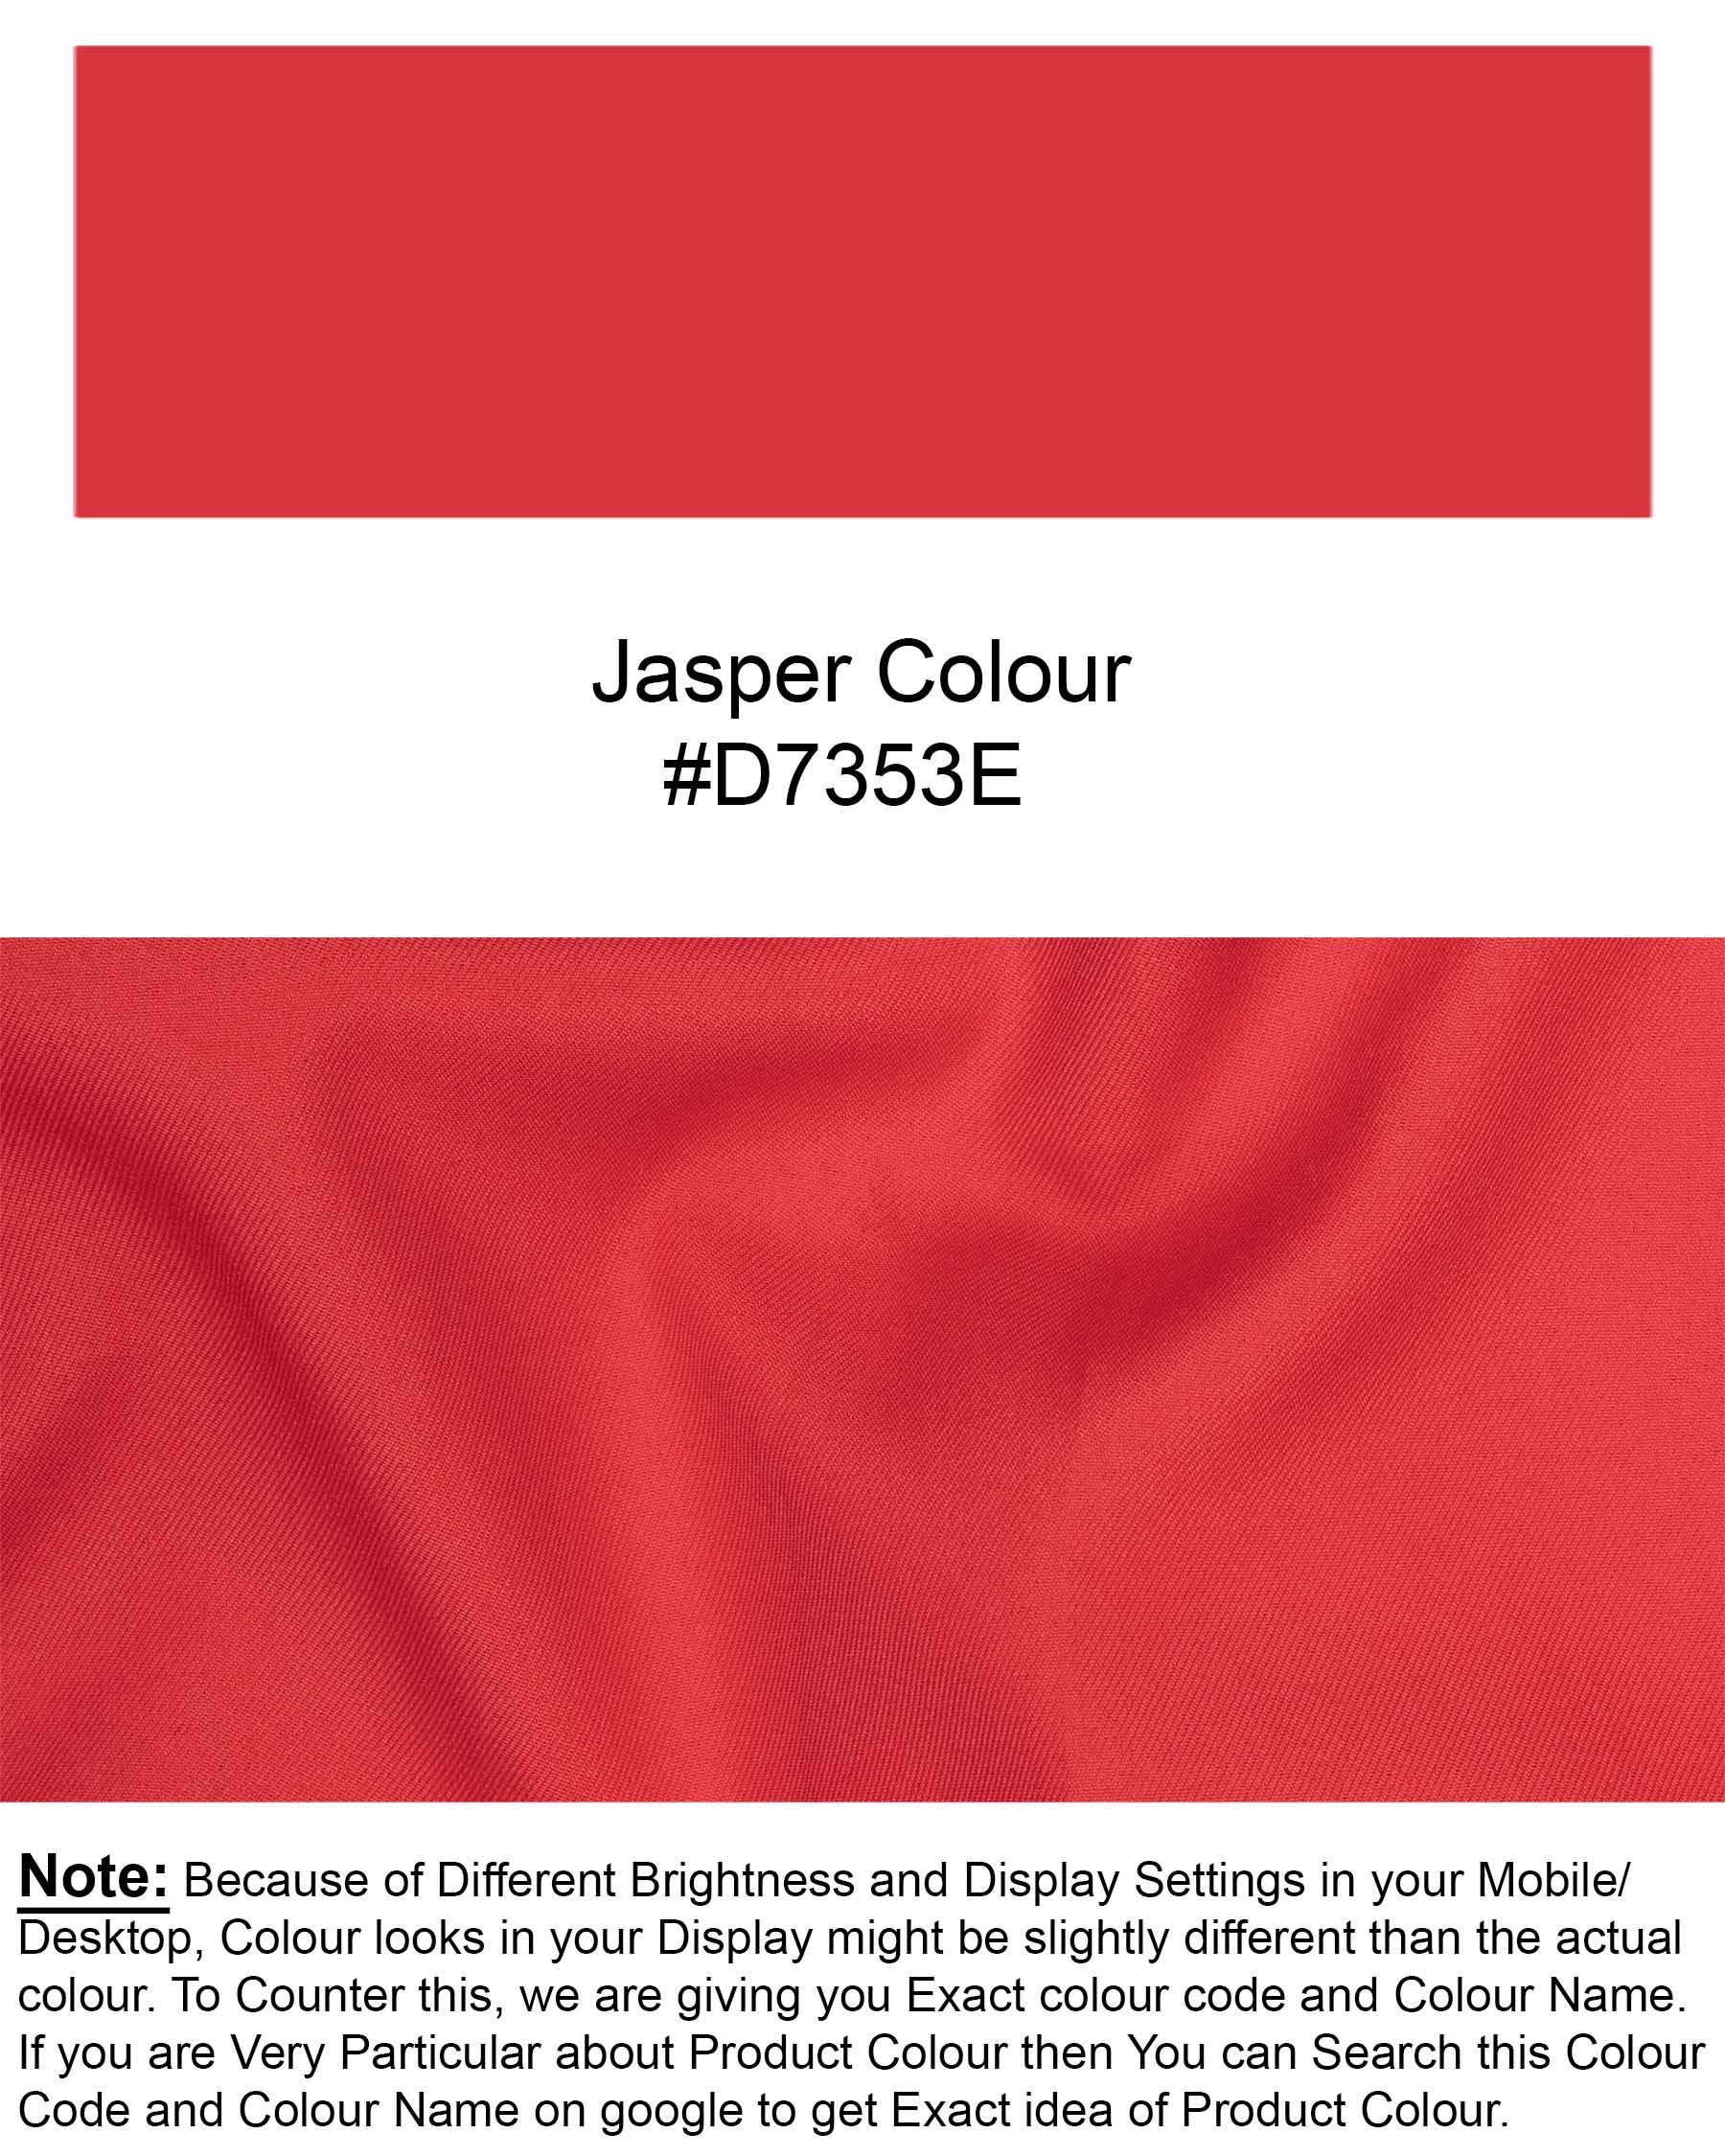 Jasper Red Bandhgala Sports Suit ST1853-BG-D41-36, ST1853-BG-D41-38, ST1853-BG-D41-40, ST1853-BG-D41-42, ST1853-BG-D41-44, ST1853-BG-D41-46, ST1853-BG-D41-48, ST1853-BG-D41-50, ST1853-BG-D41-52, ST1853-BG-D41-54, ST1853-BG-D41-56, ST1853-BG-D41-58, ST1853-BG-D41-60